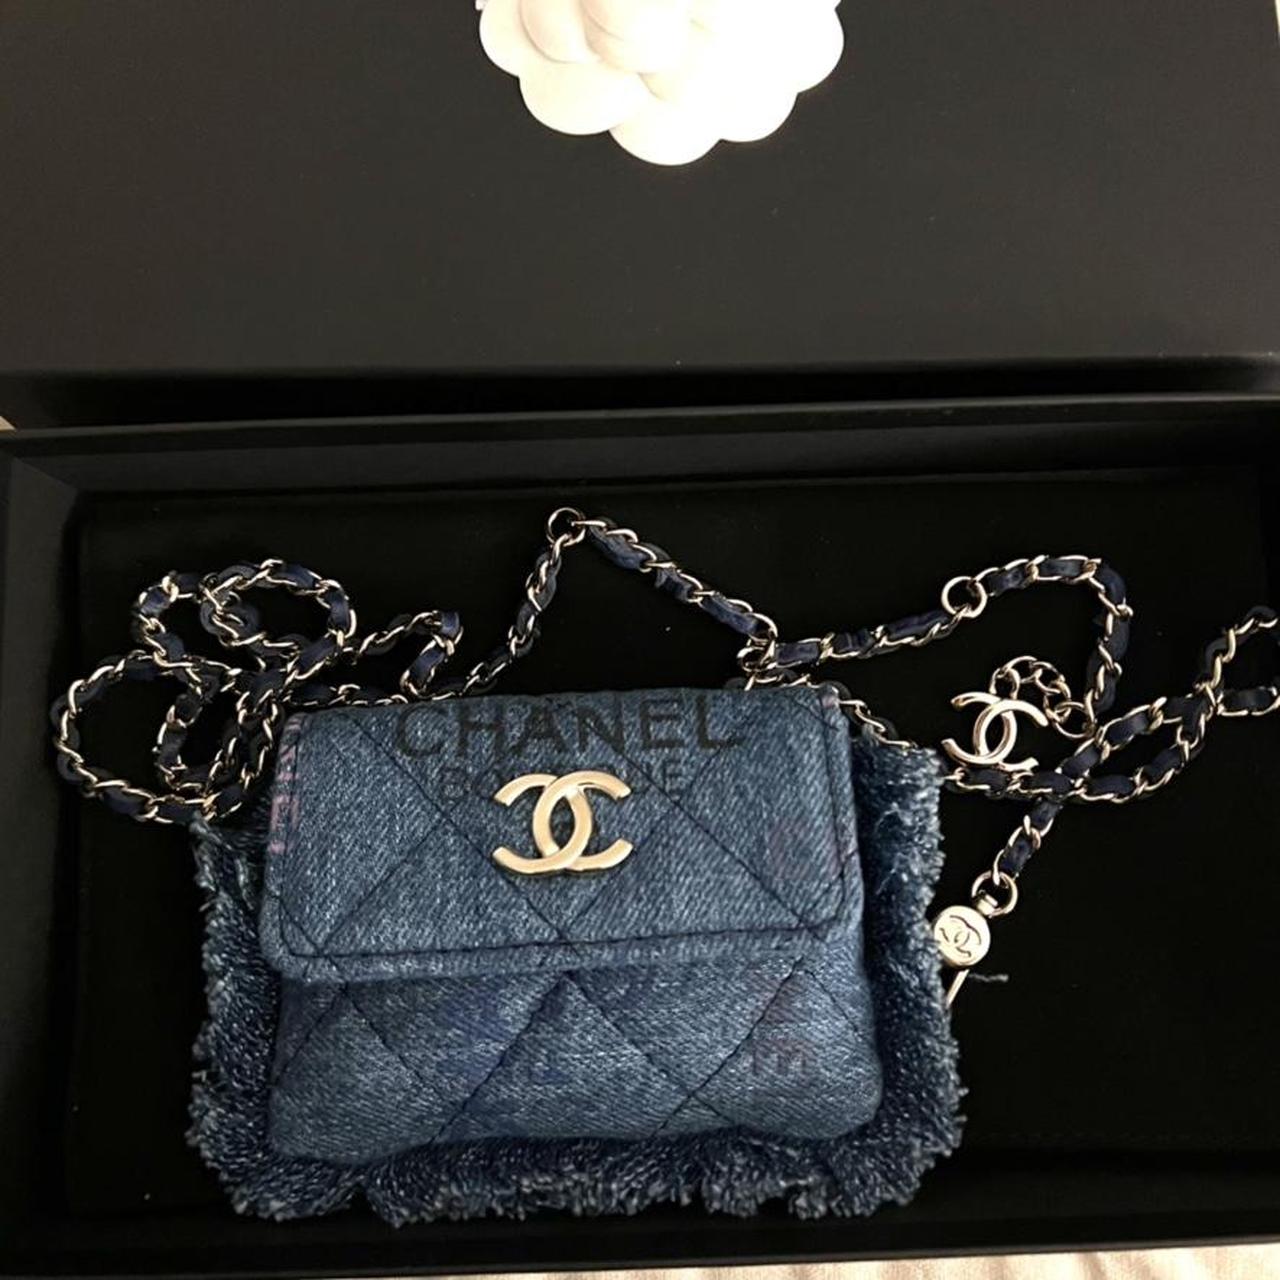 Chanel Women's Bag | Depop